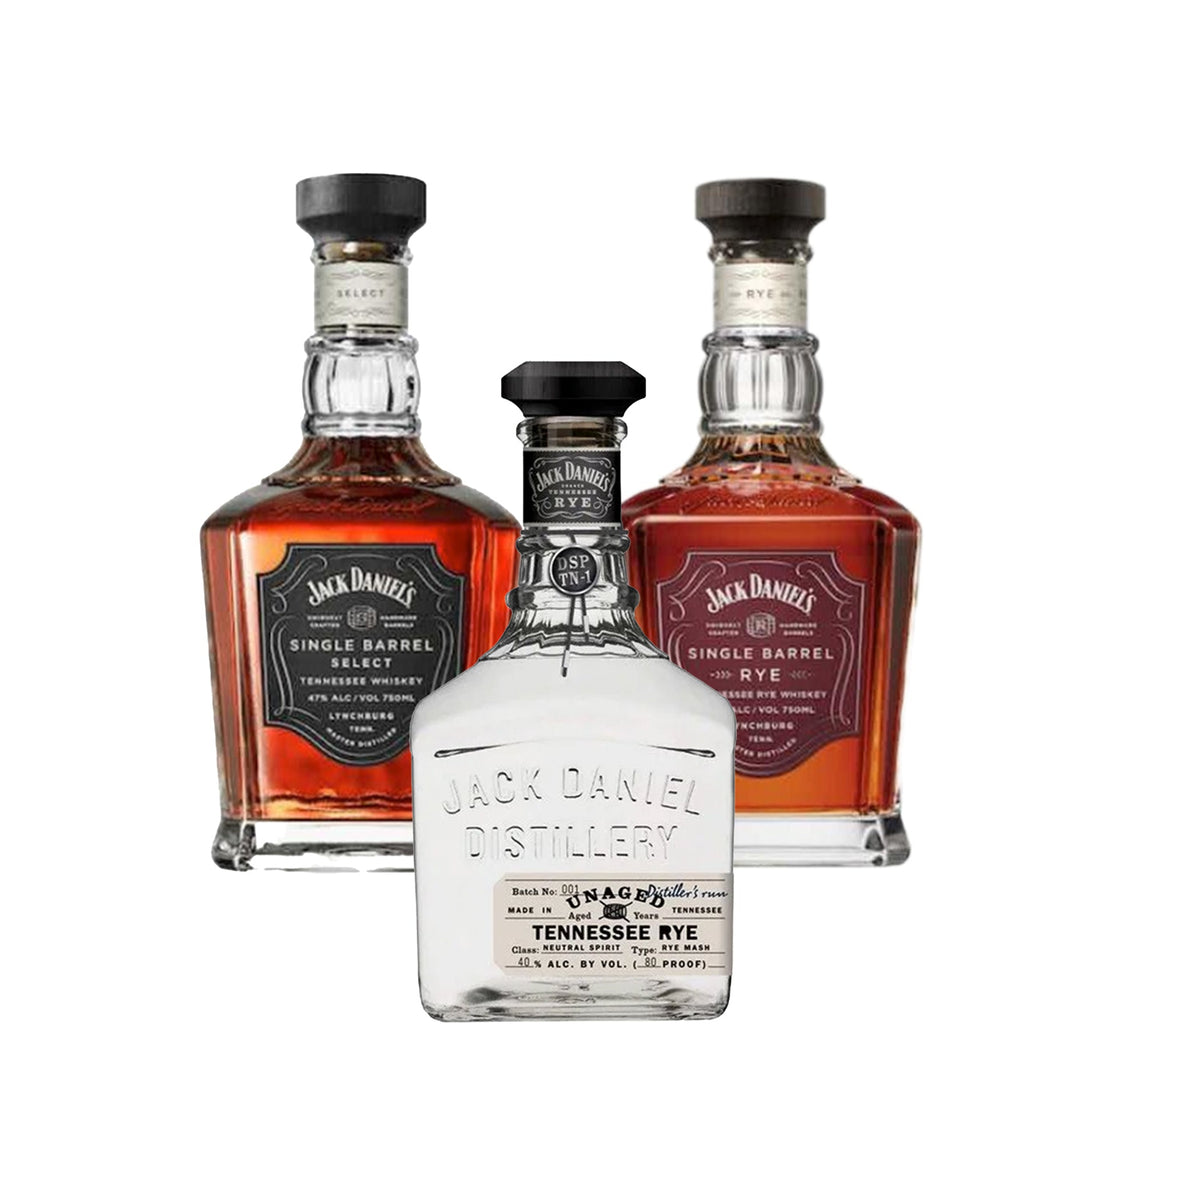 Jack Daniels Single Barrel Select & Rye & Jack Daniel Unaged Tennessee Rye